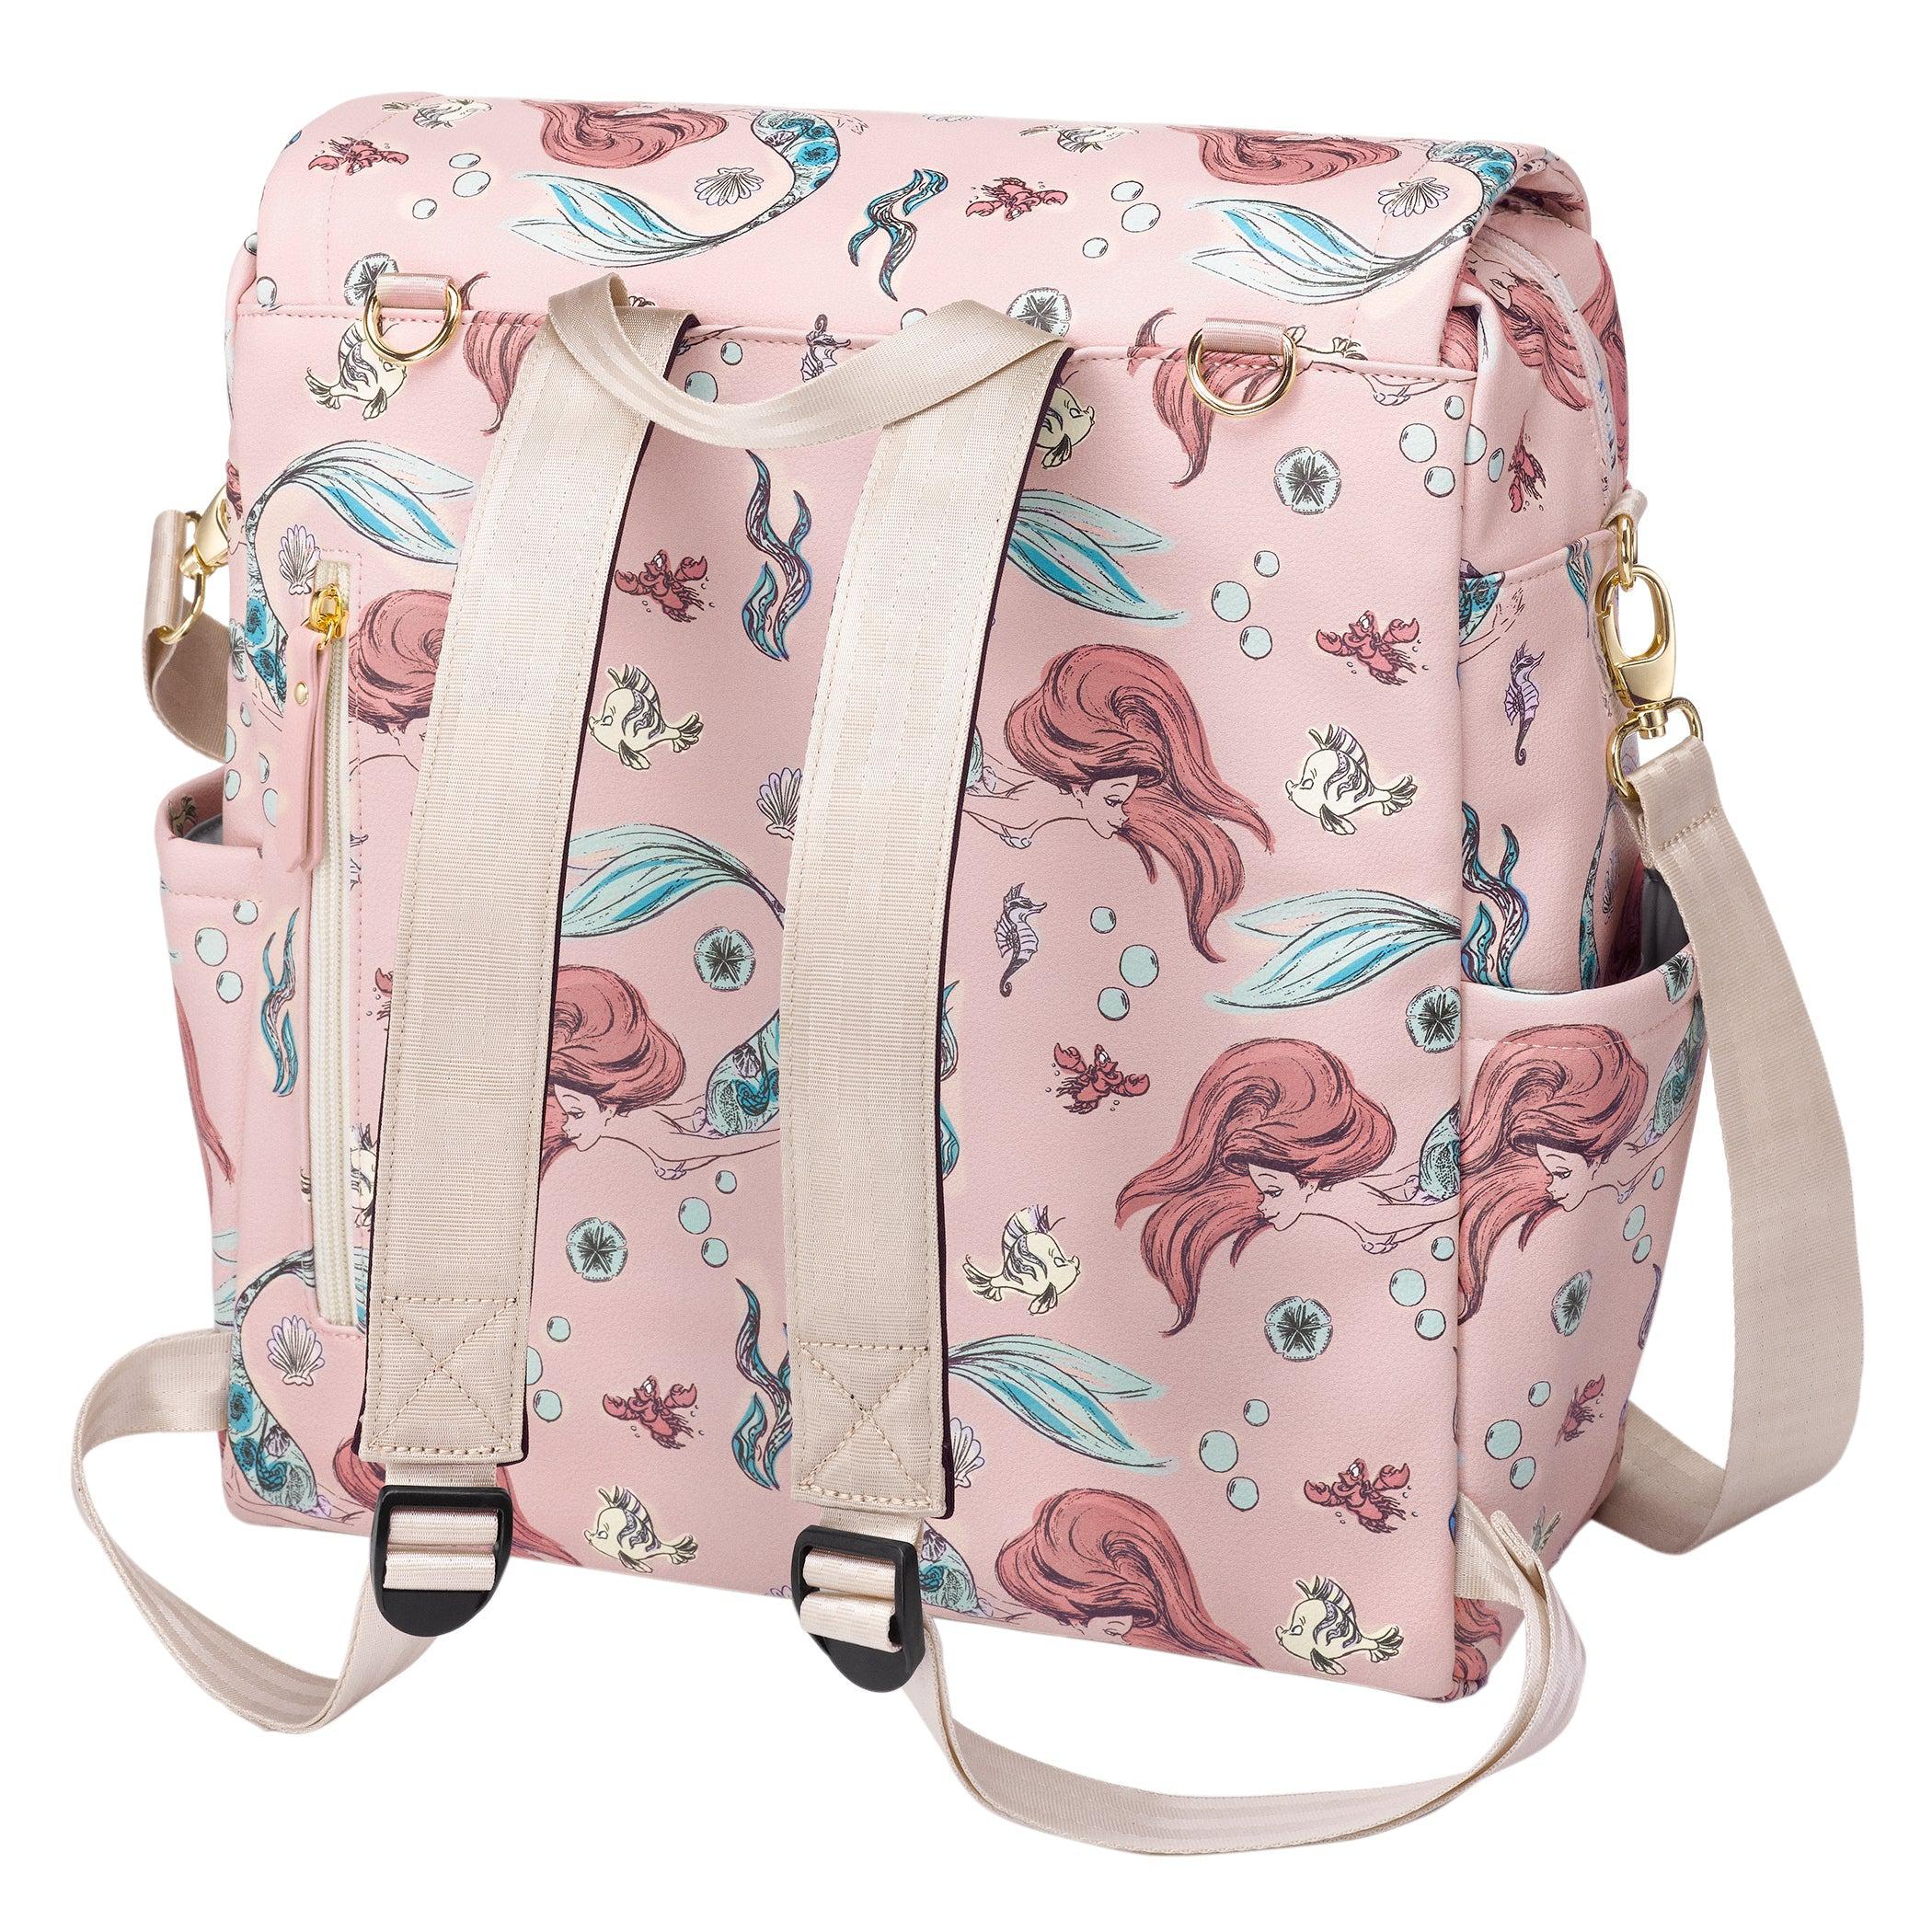 Petunia Pickle Bottom Boxy Backpack Diaper Bag in Disney's Little Mermaid